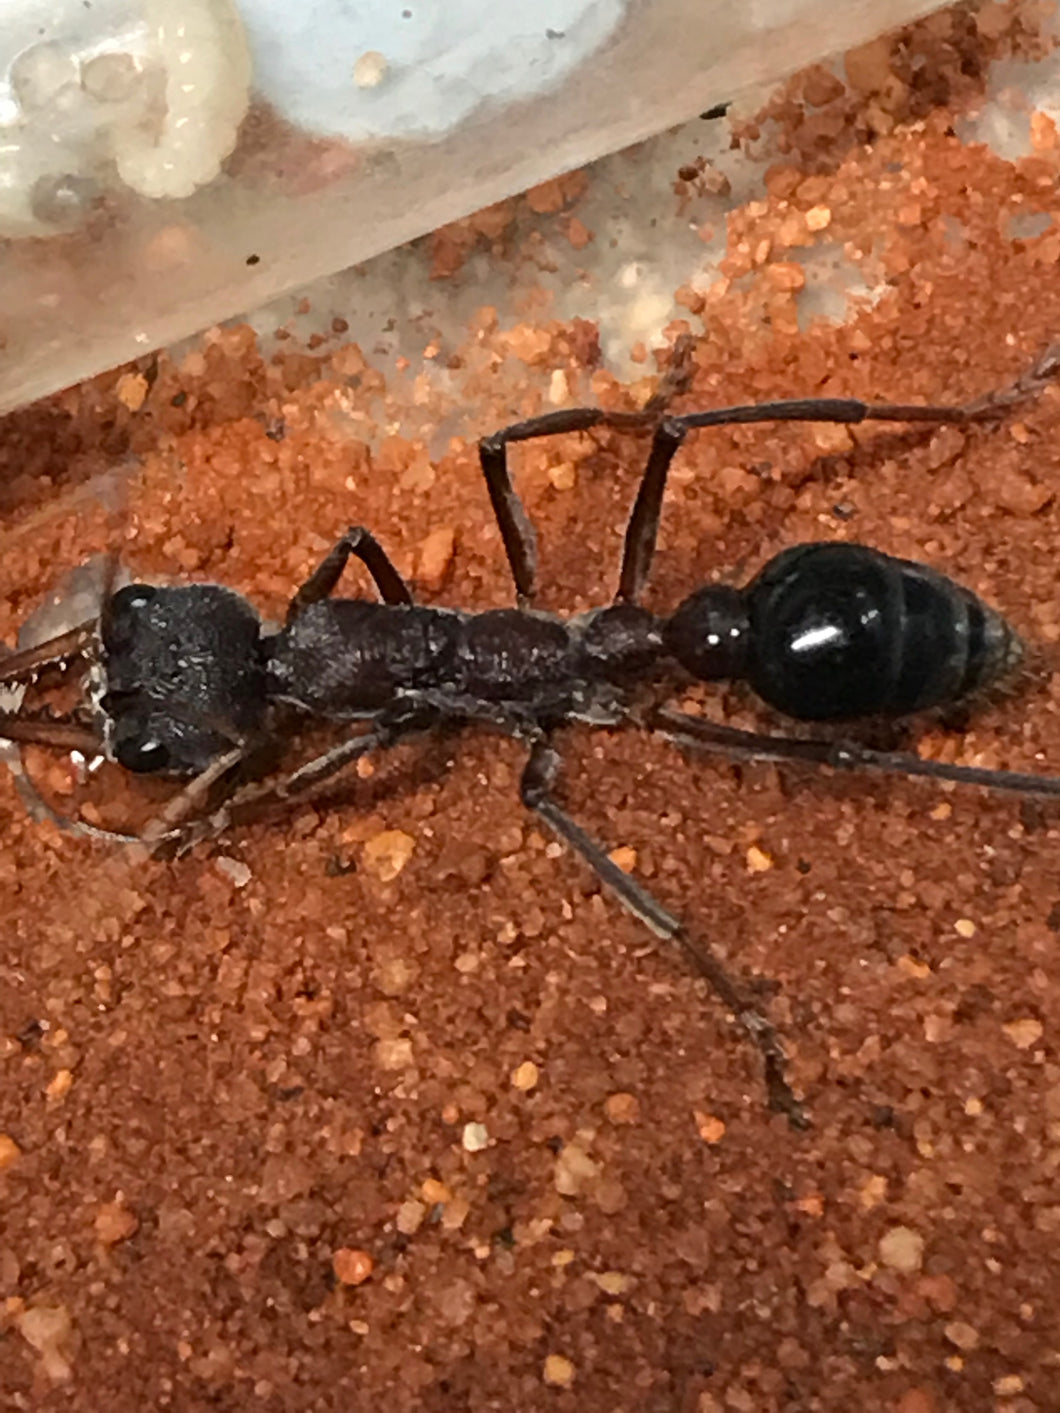 Ant Queen Bullant  Myrmecia Simillima (ergatoid)